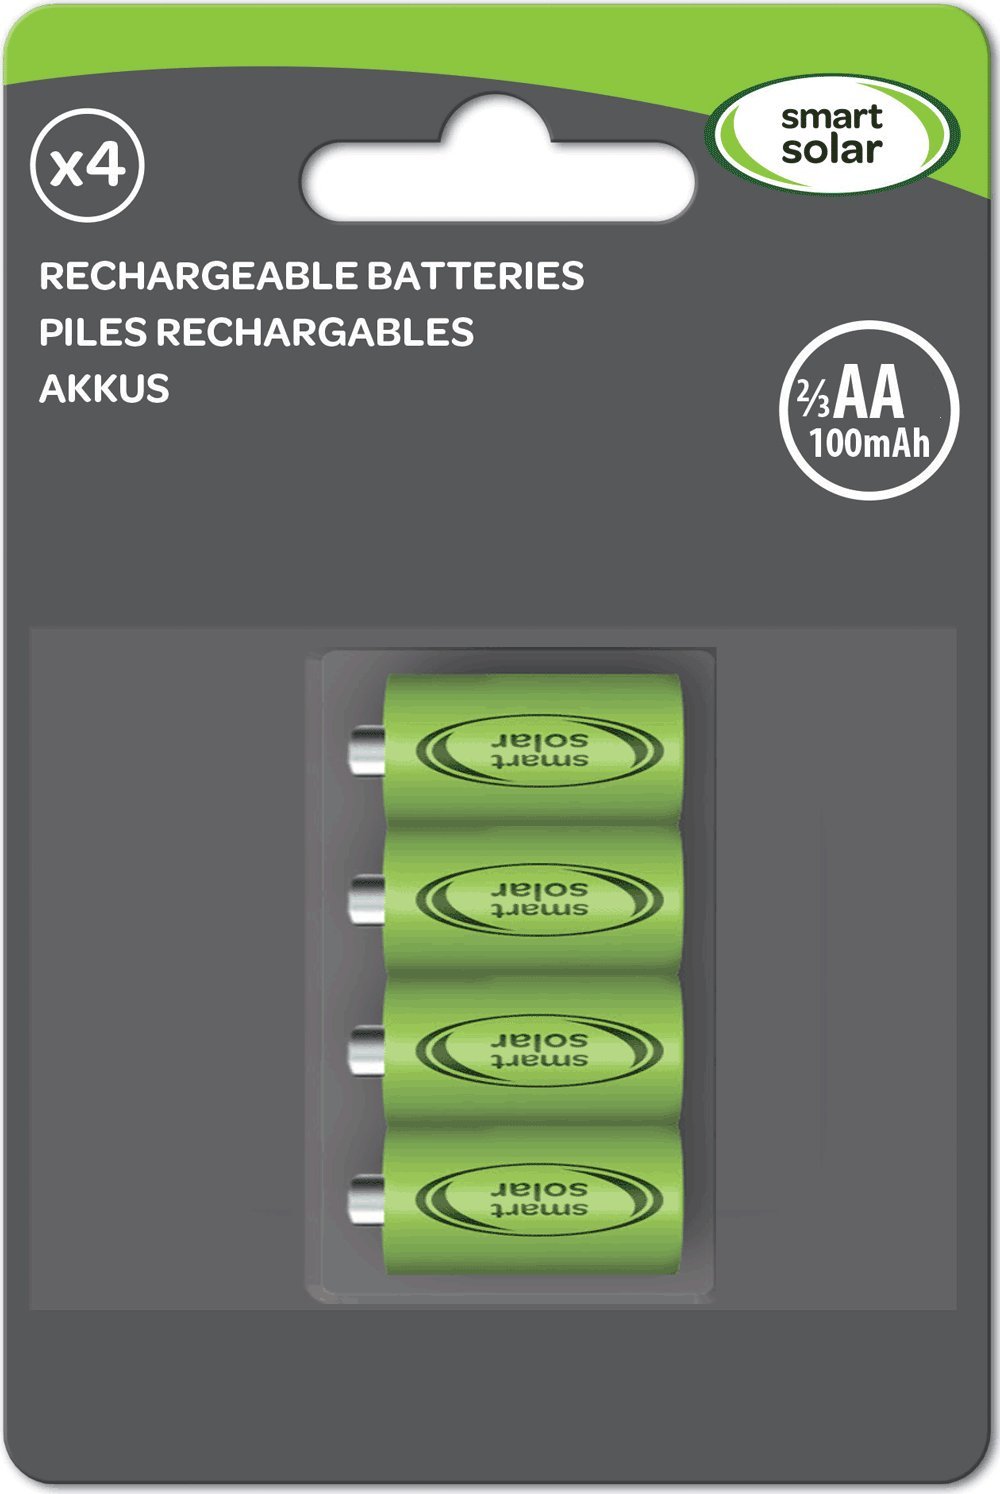 Smart Solar 2/3 AA Rechargeable Batteries 200mAh (4pk)